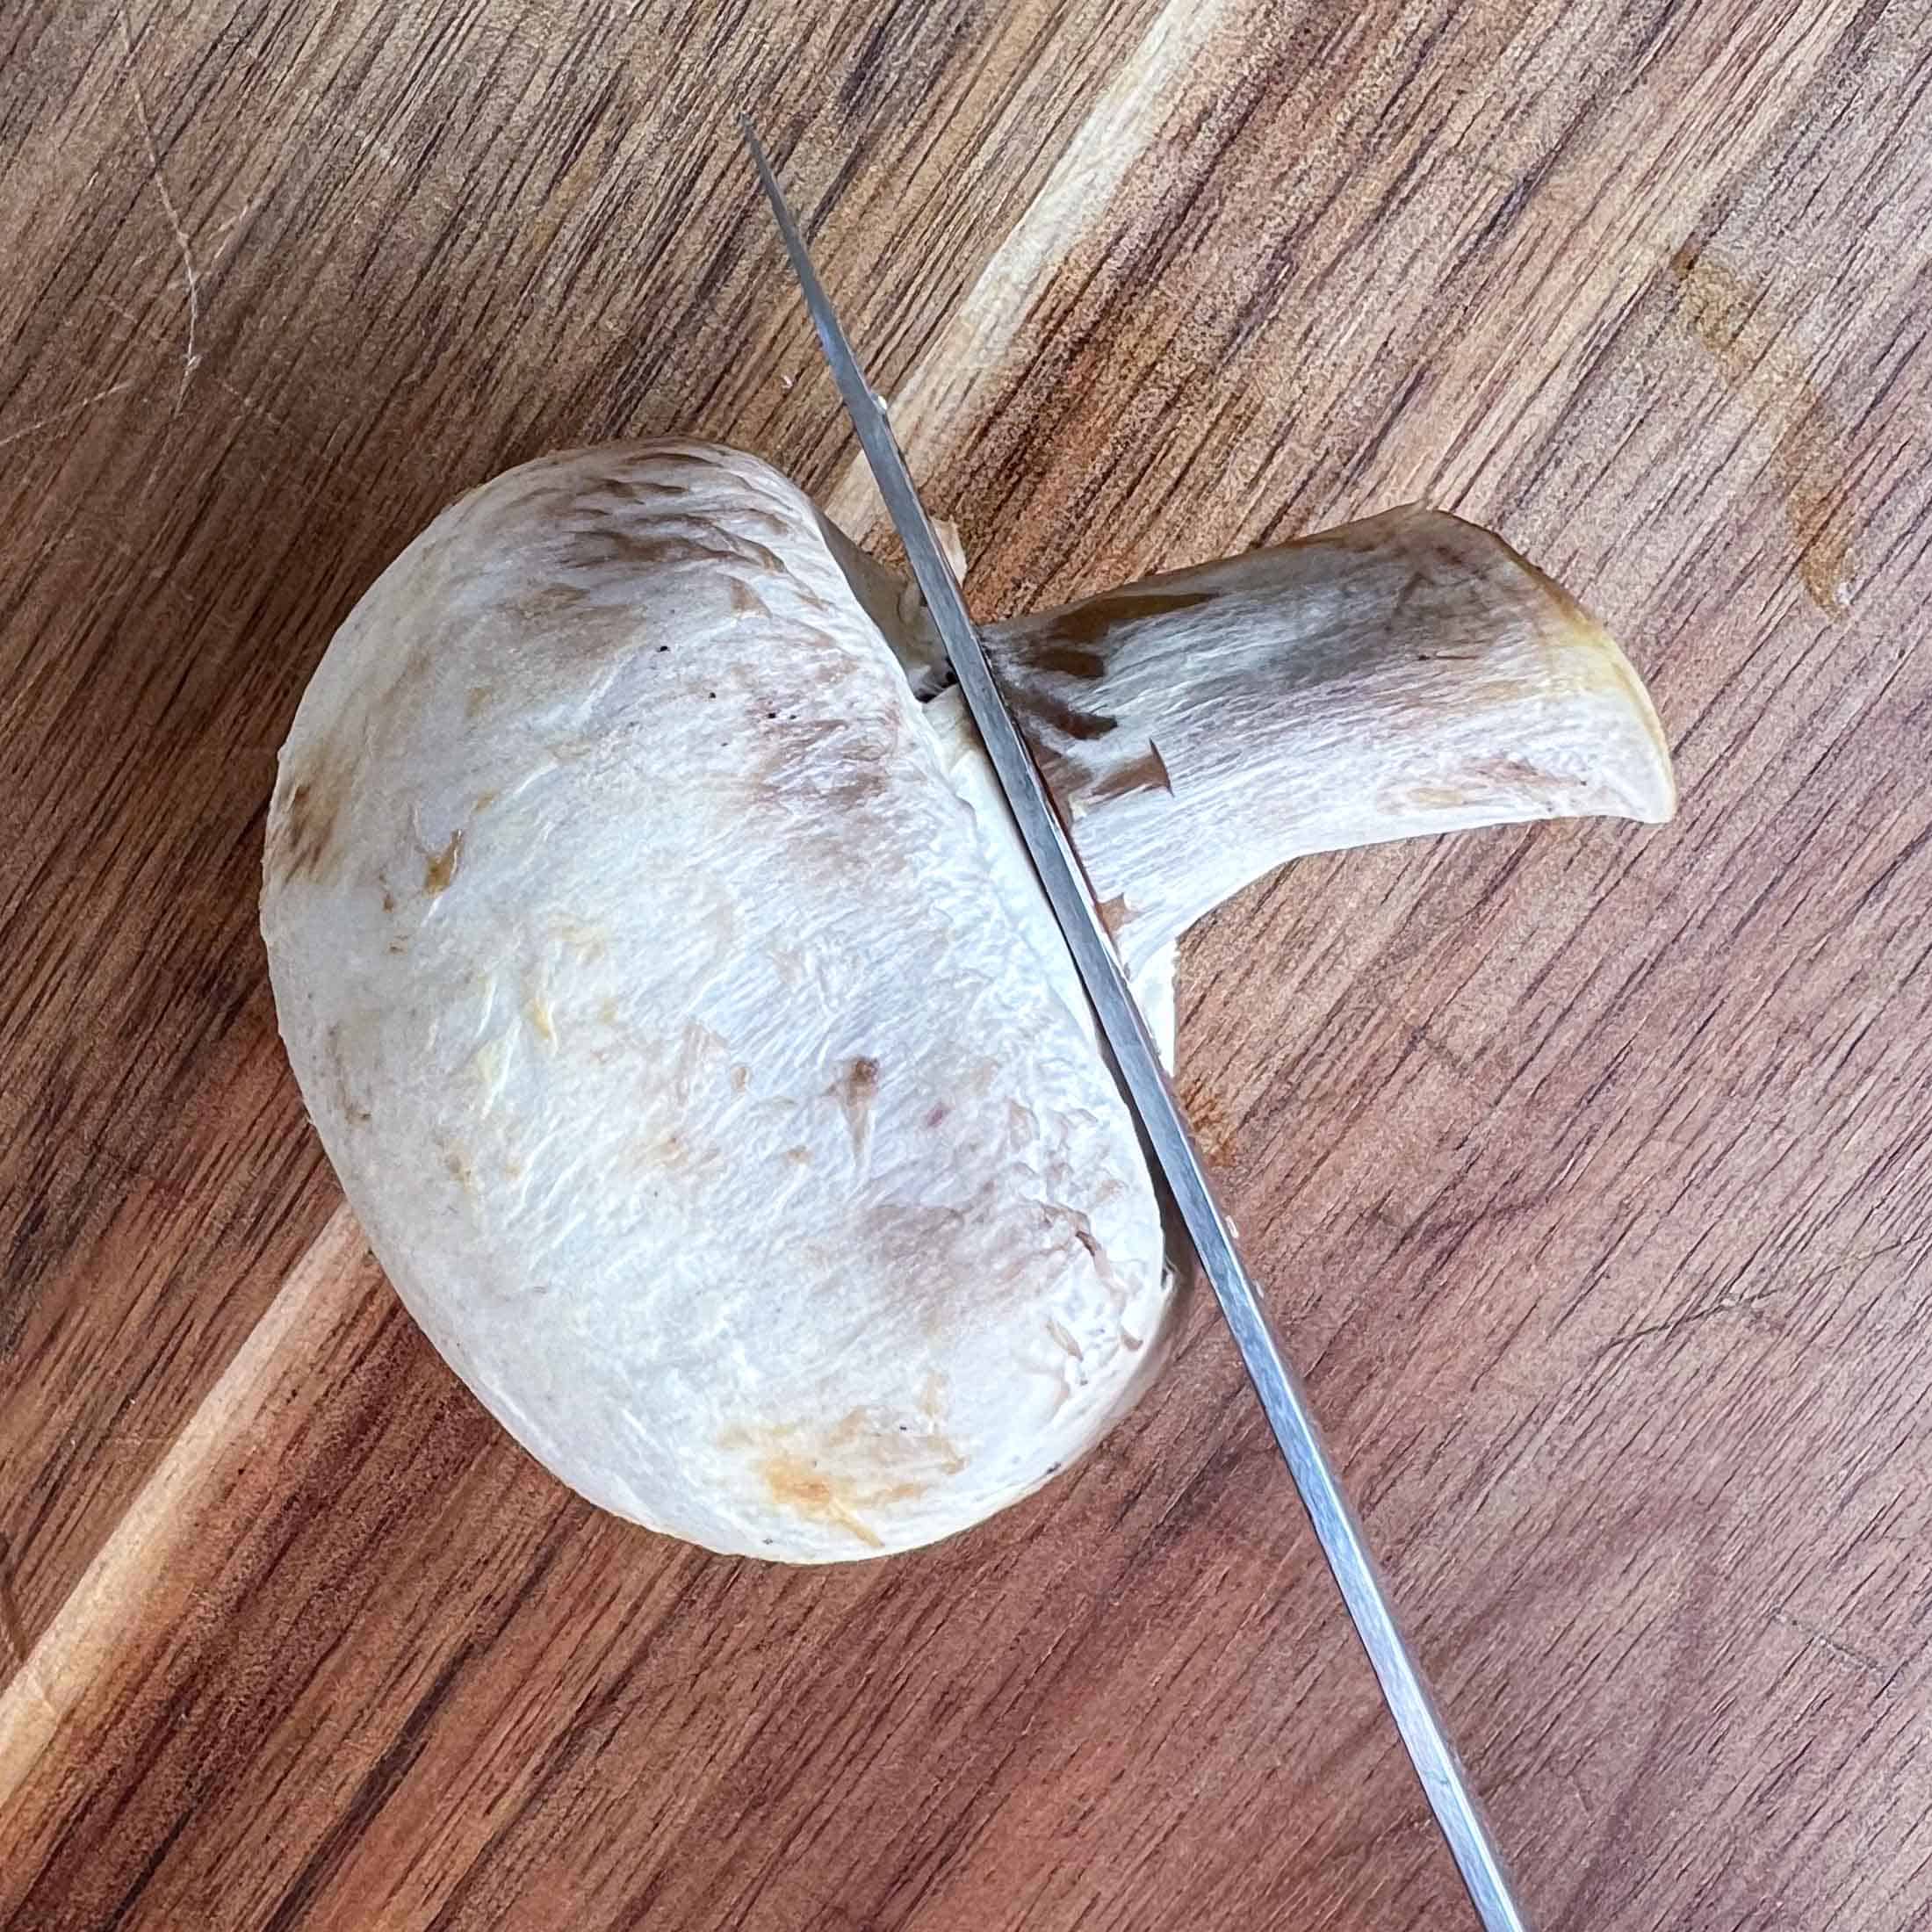 A sharp knife cutting the stem of a white mushroom off.